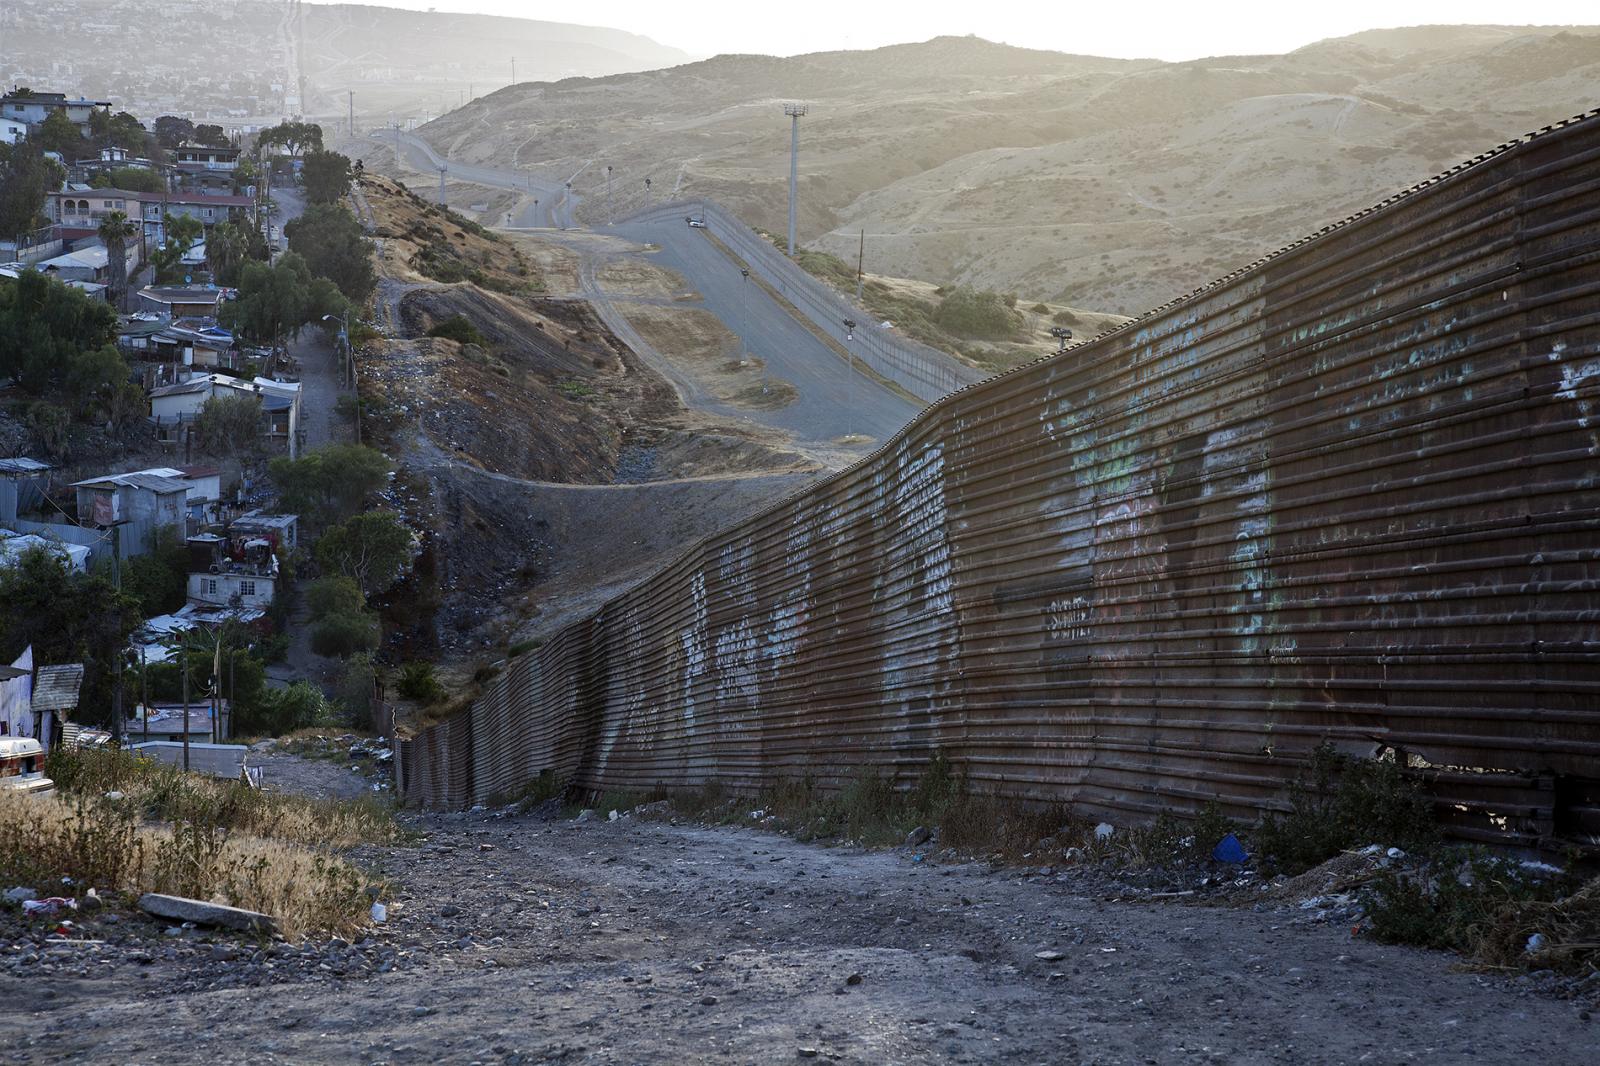 Borderwall in Tijuana (Baja California, Mexico)